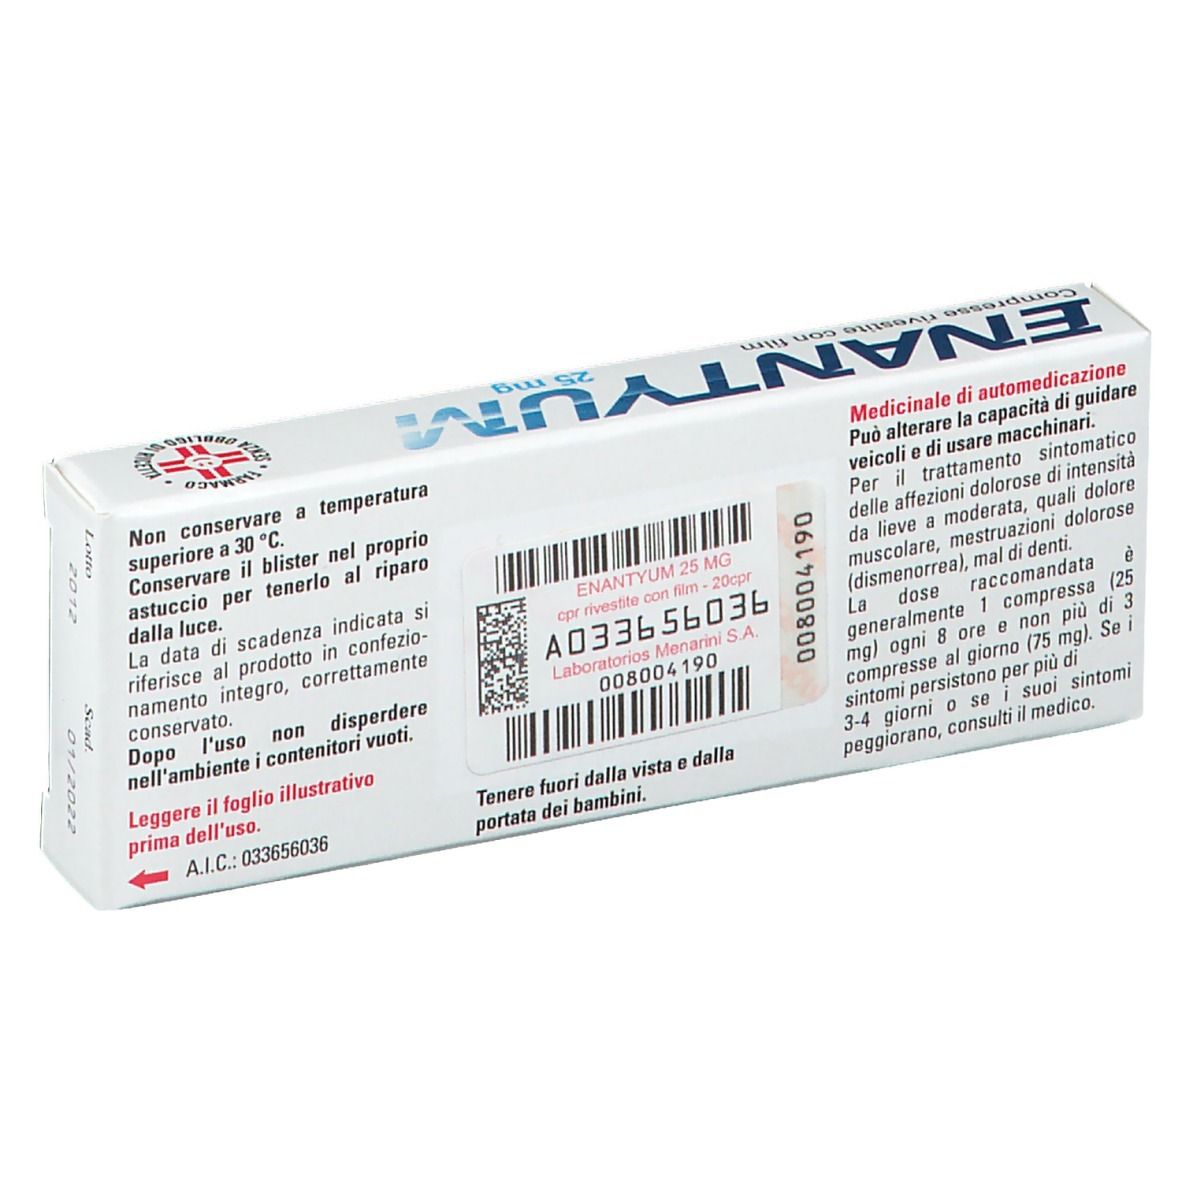 ENANTYUM 25 mg Compresse